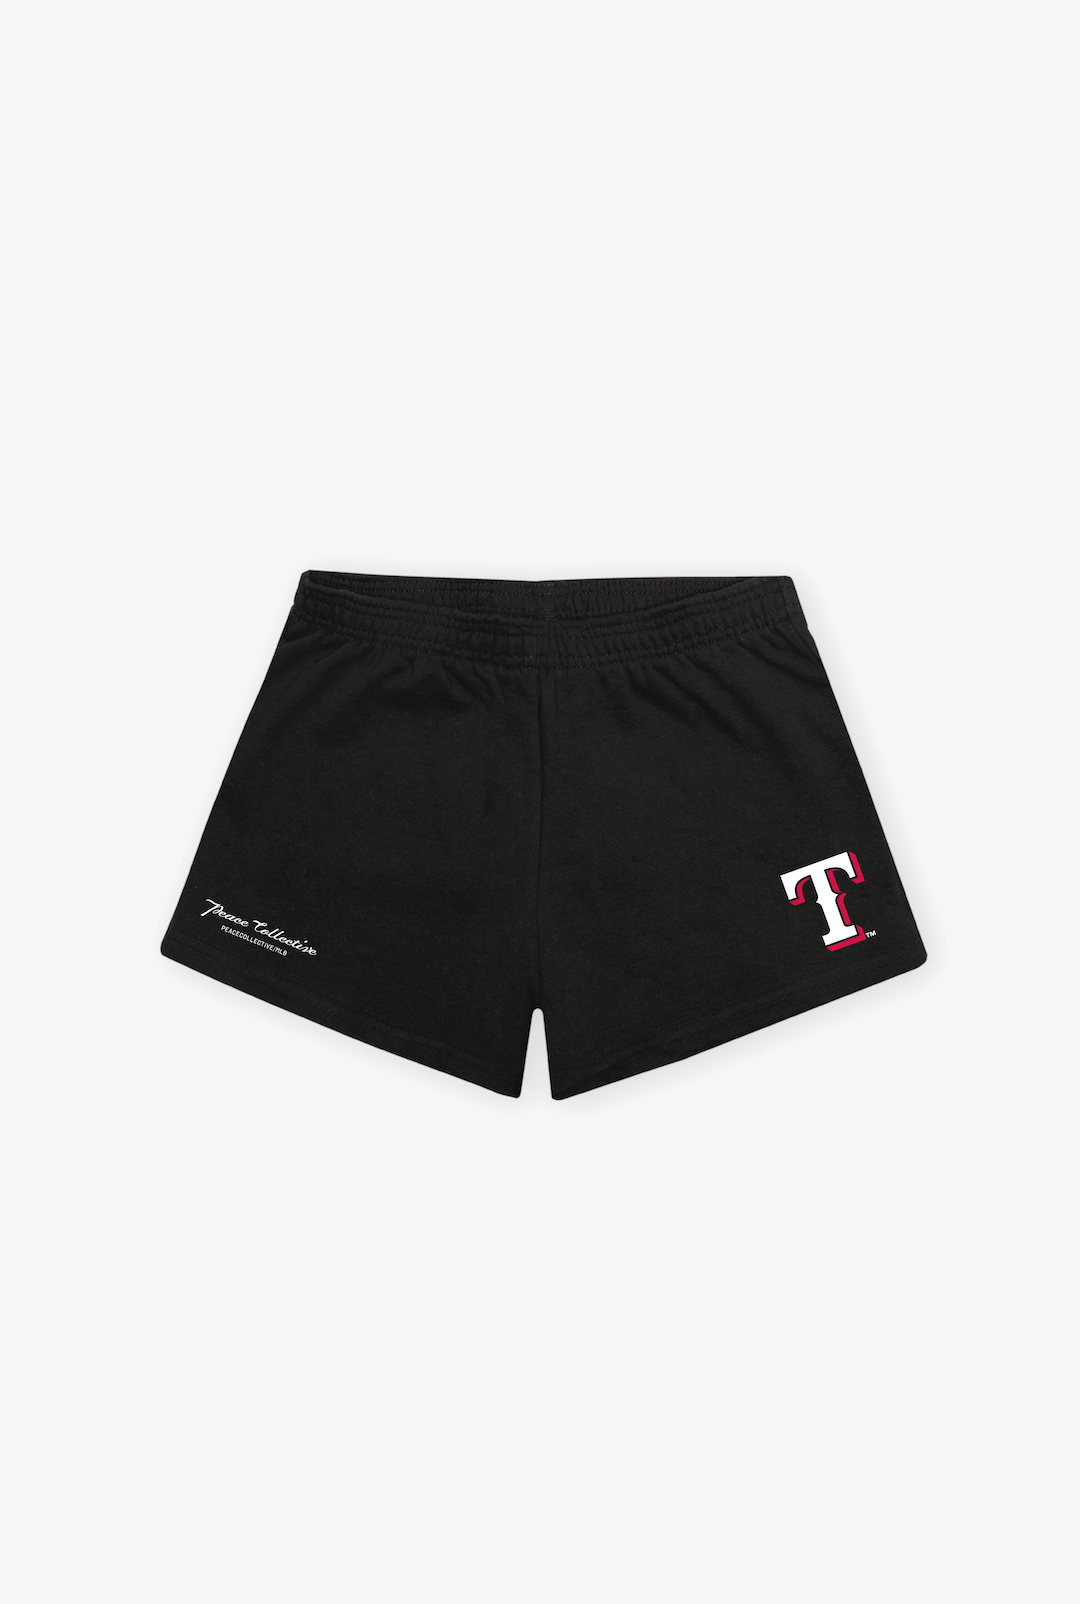 Texas Rangers Logo Women's Fleece Shorts - Black